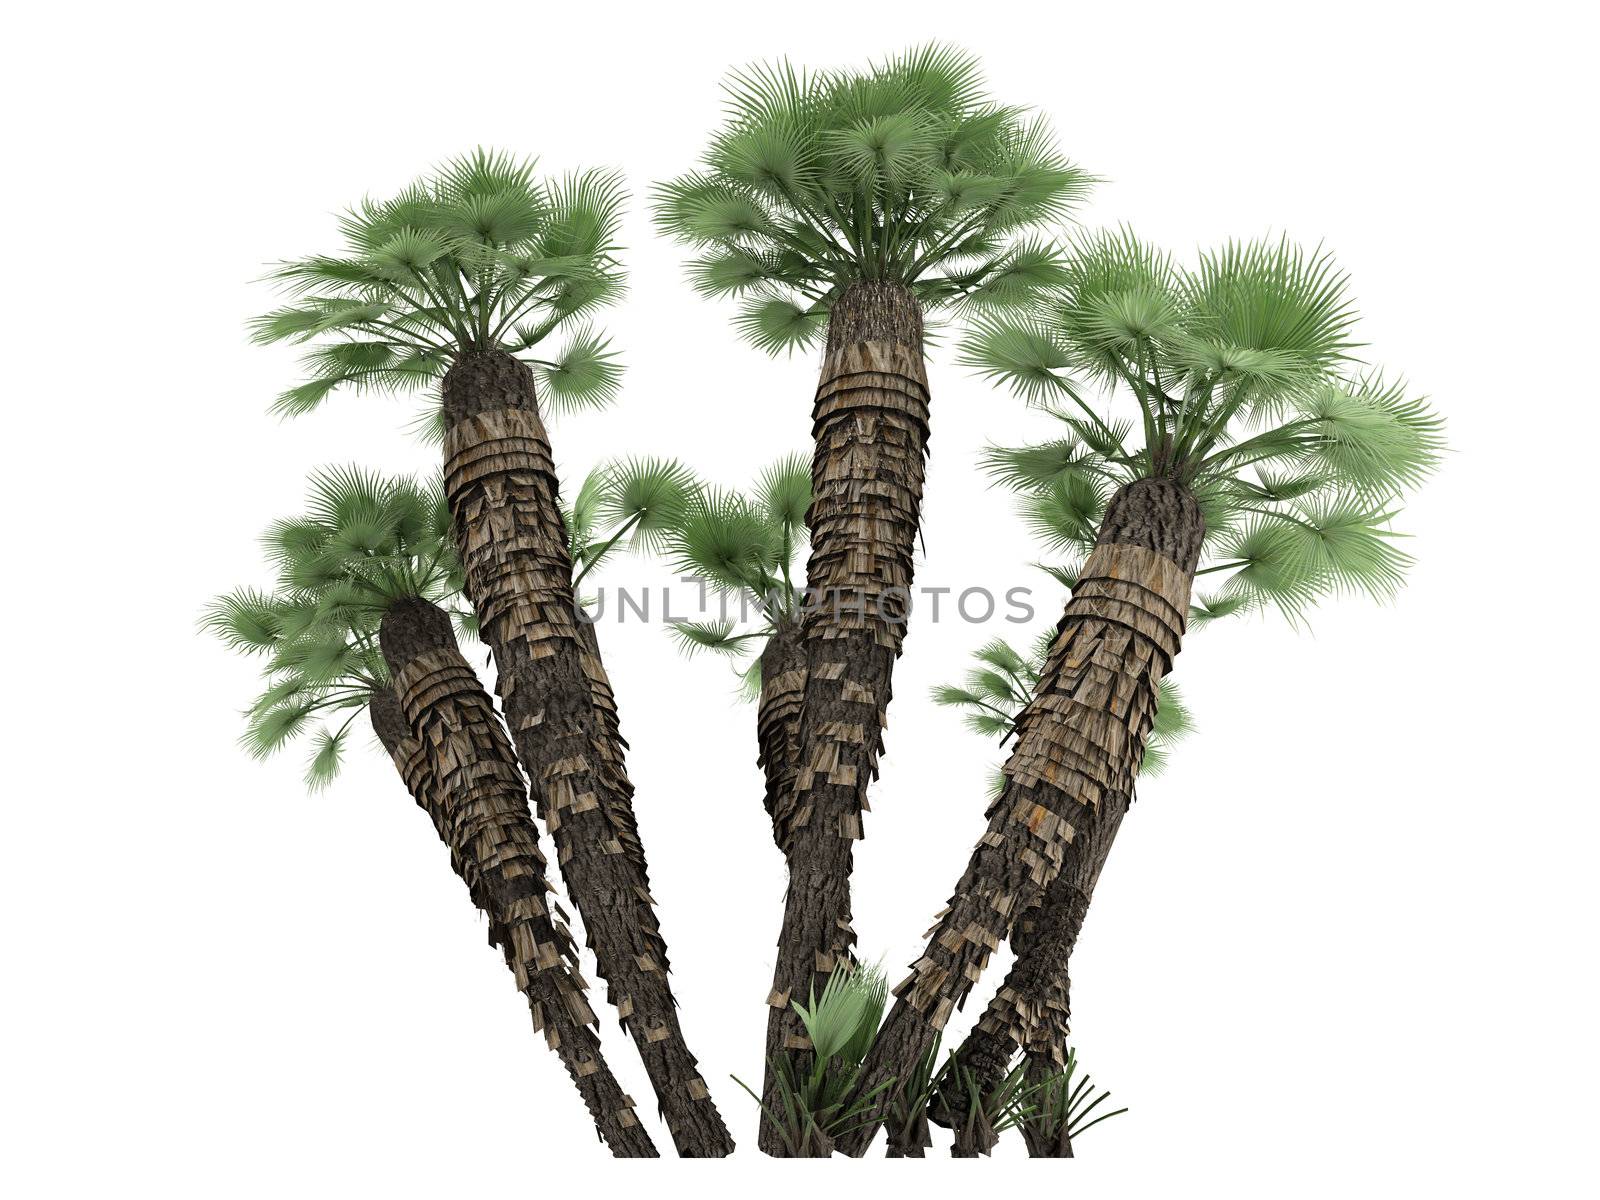 European Fan Palm or Chamaerops humilis by AlexanderMorozov